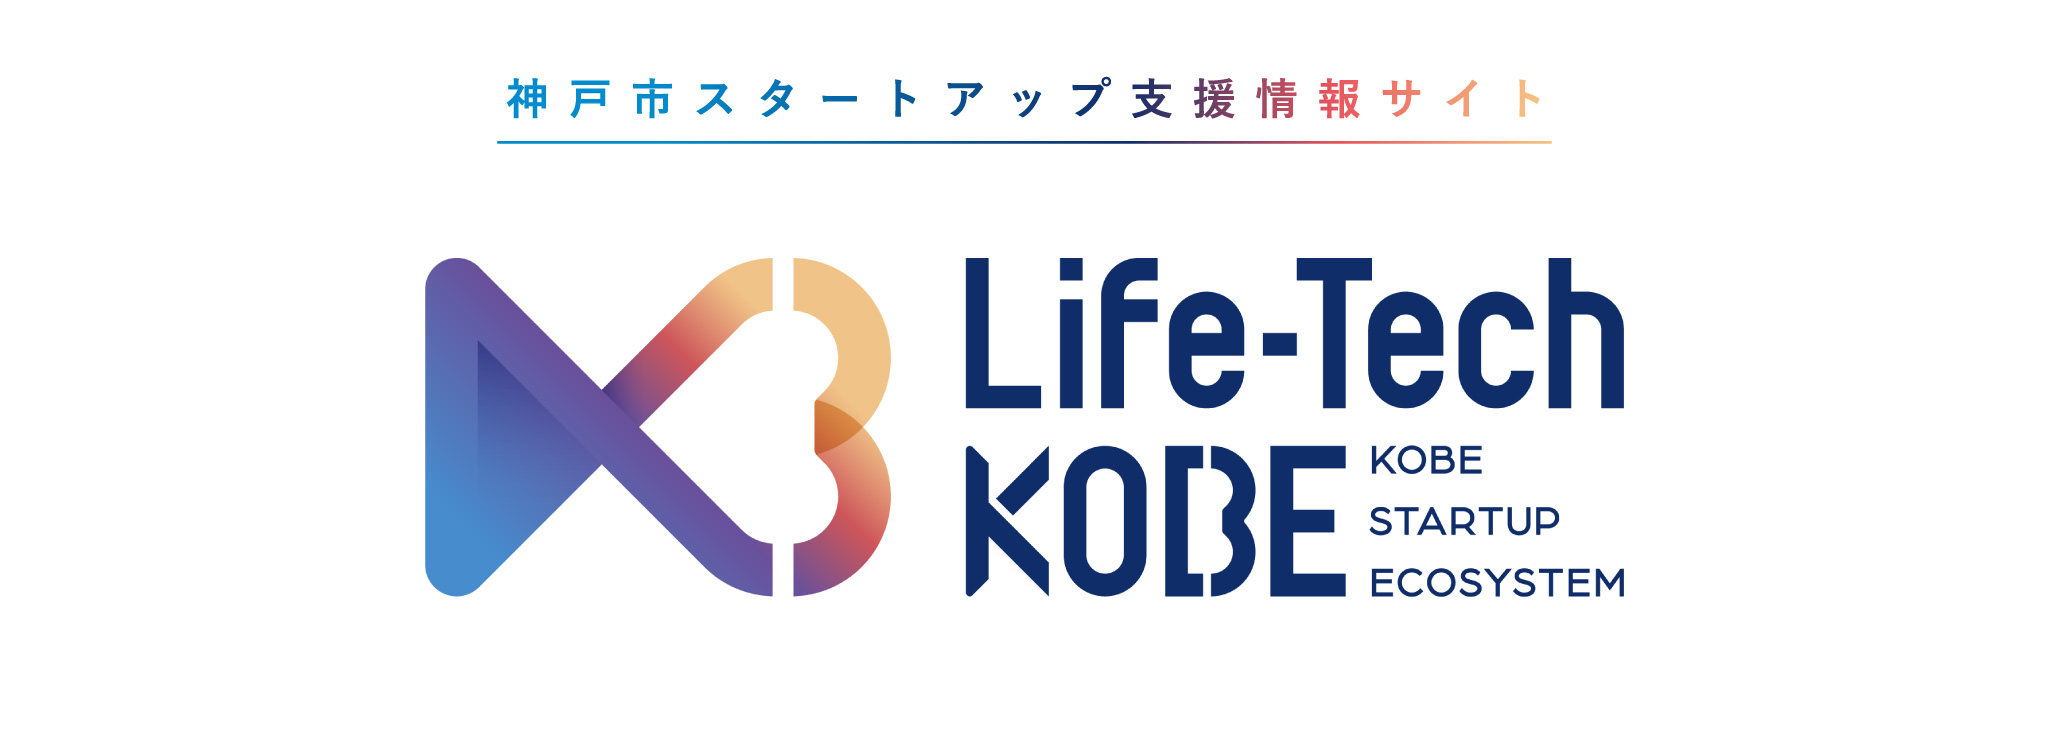 Life-Tech KOBE